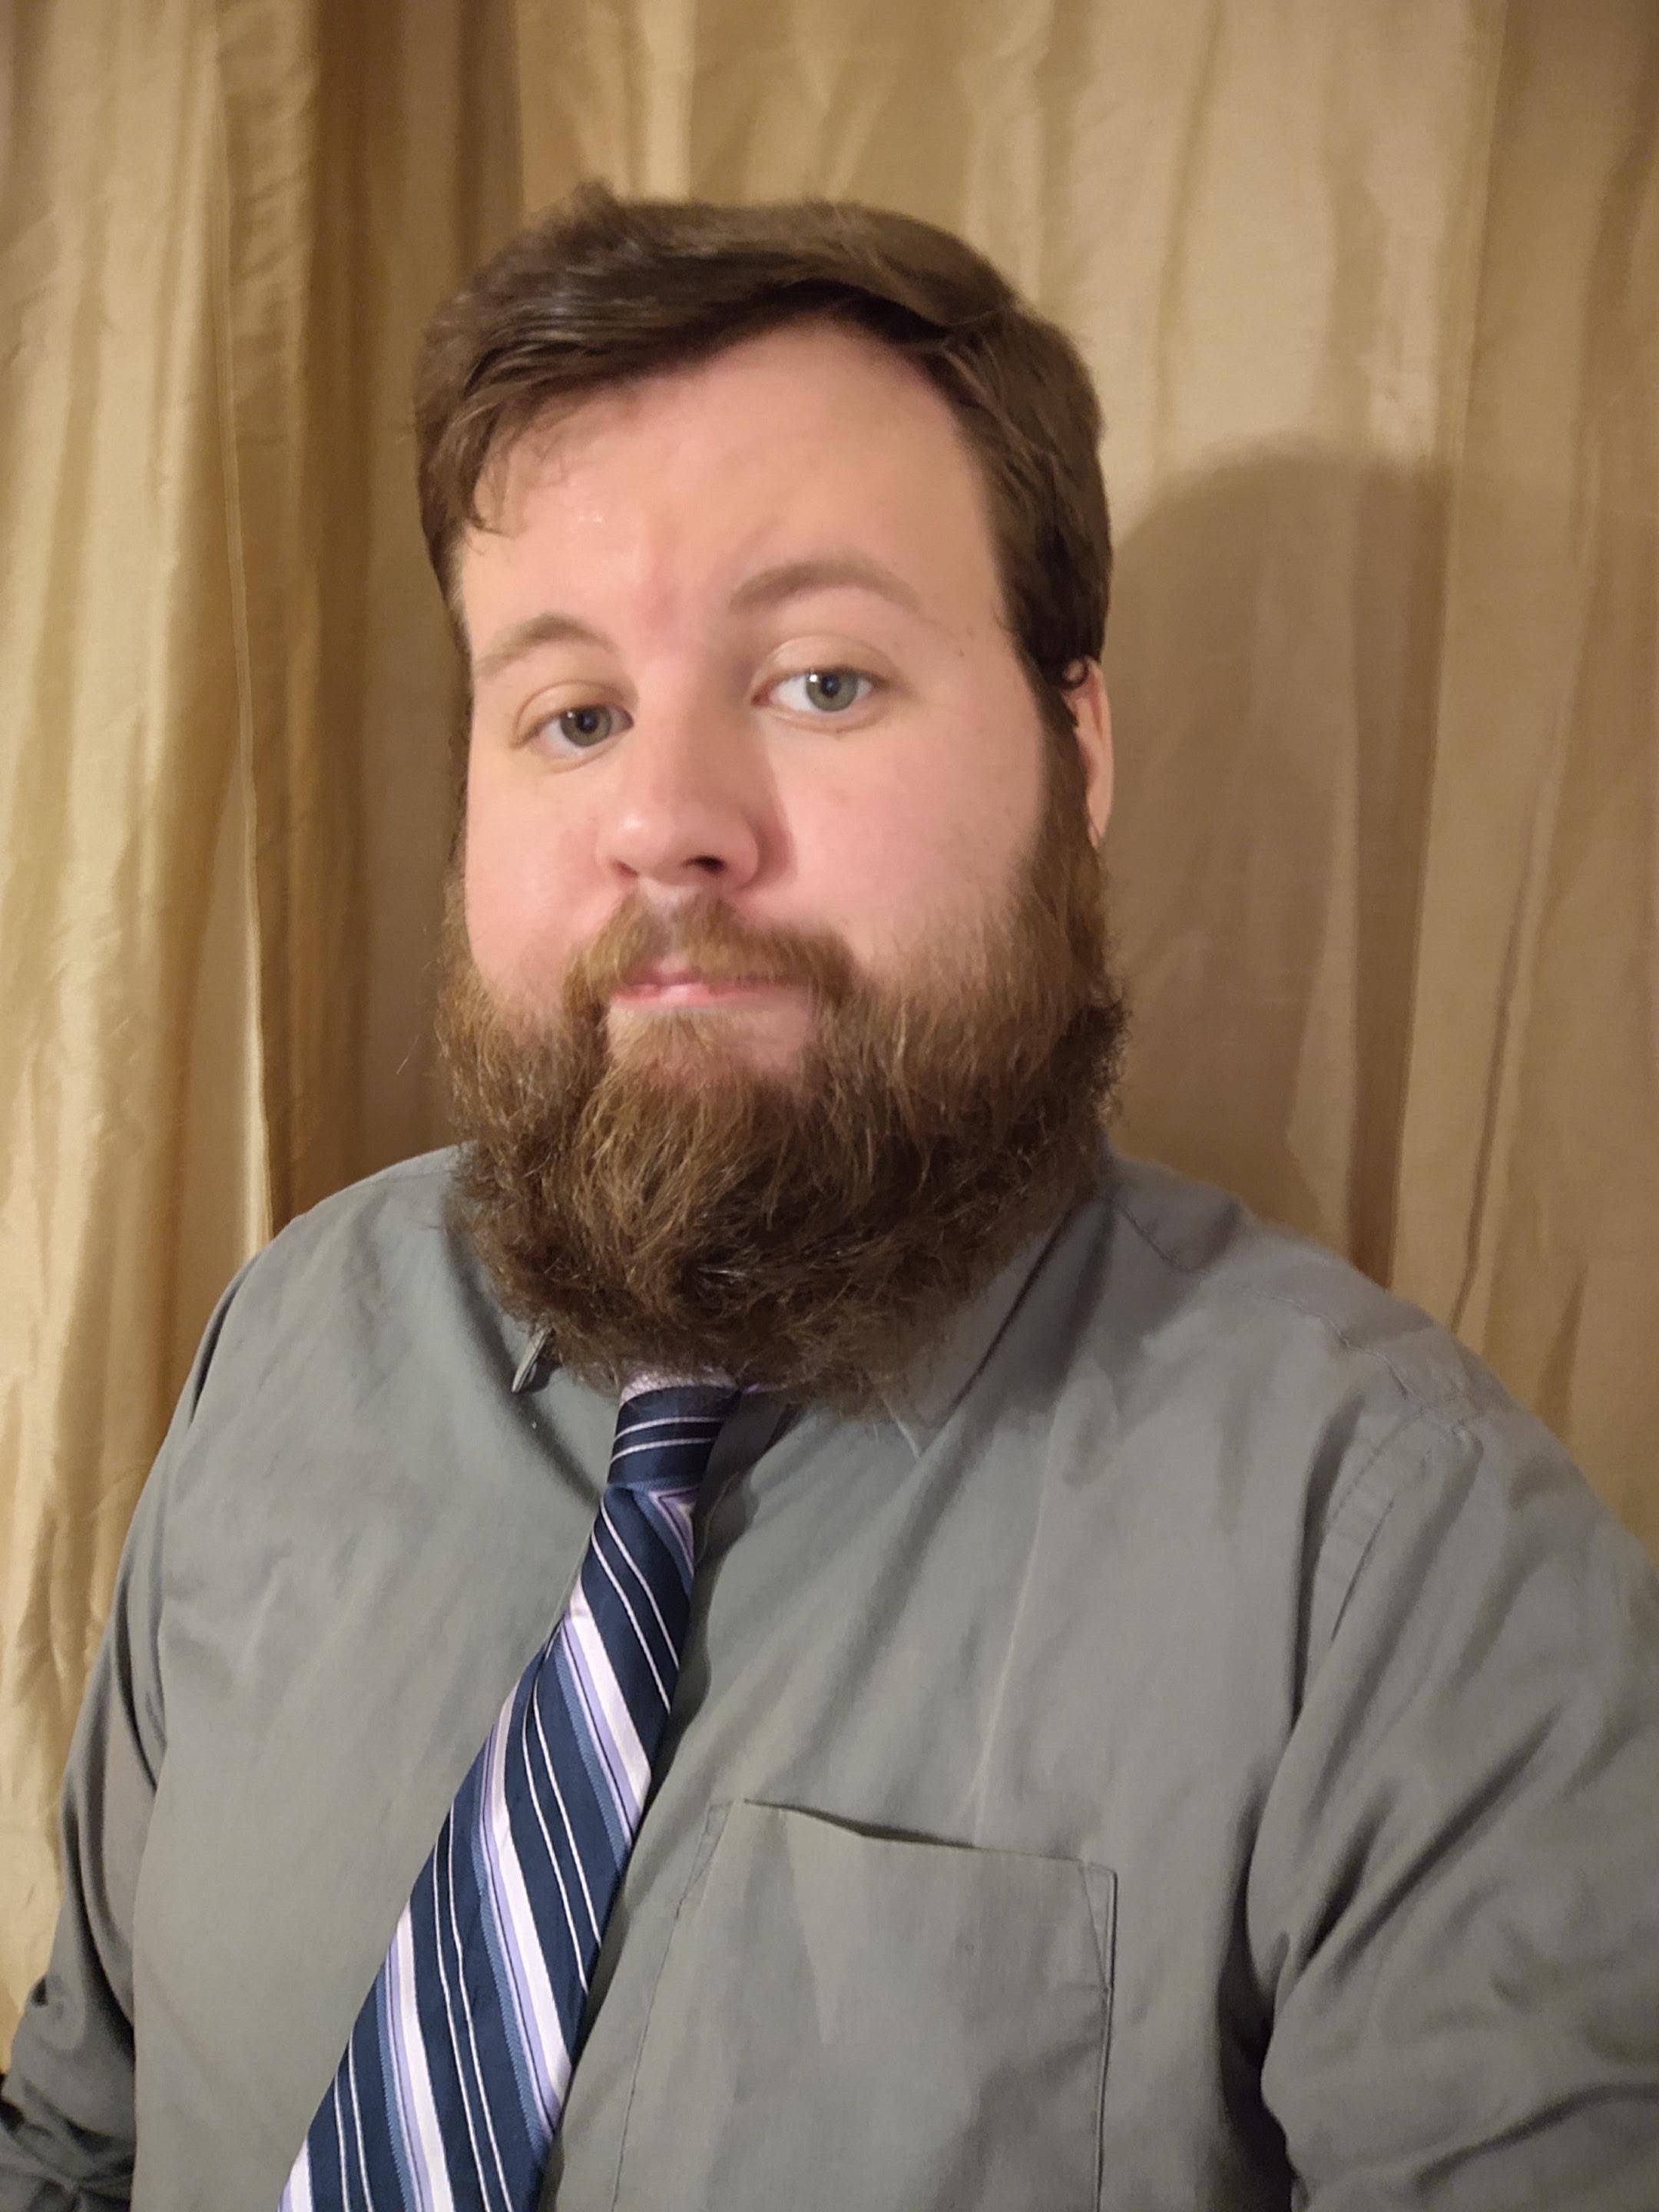 Man with beard wearing a tie